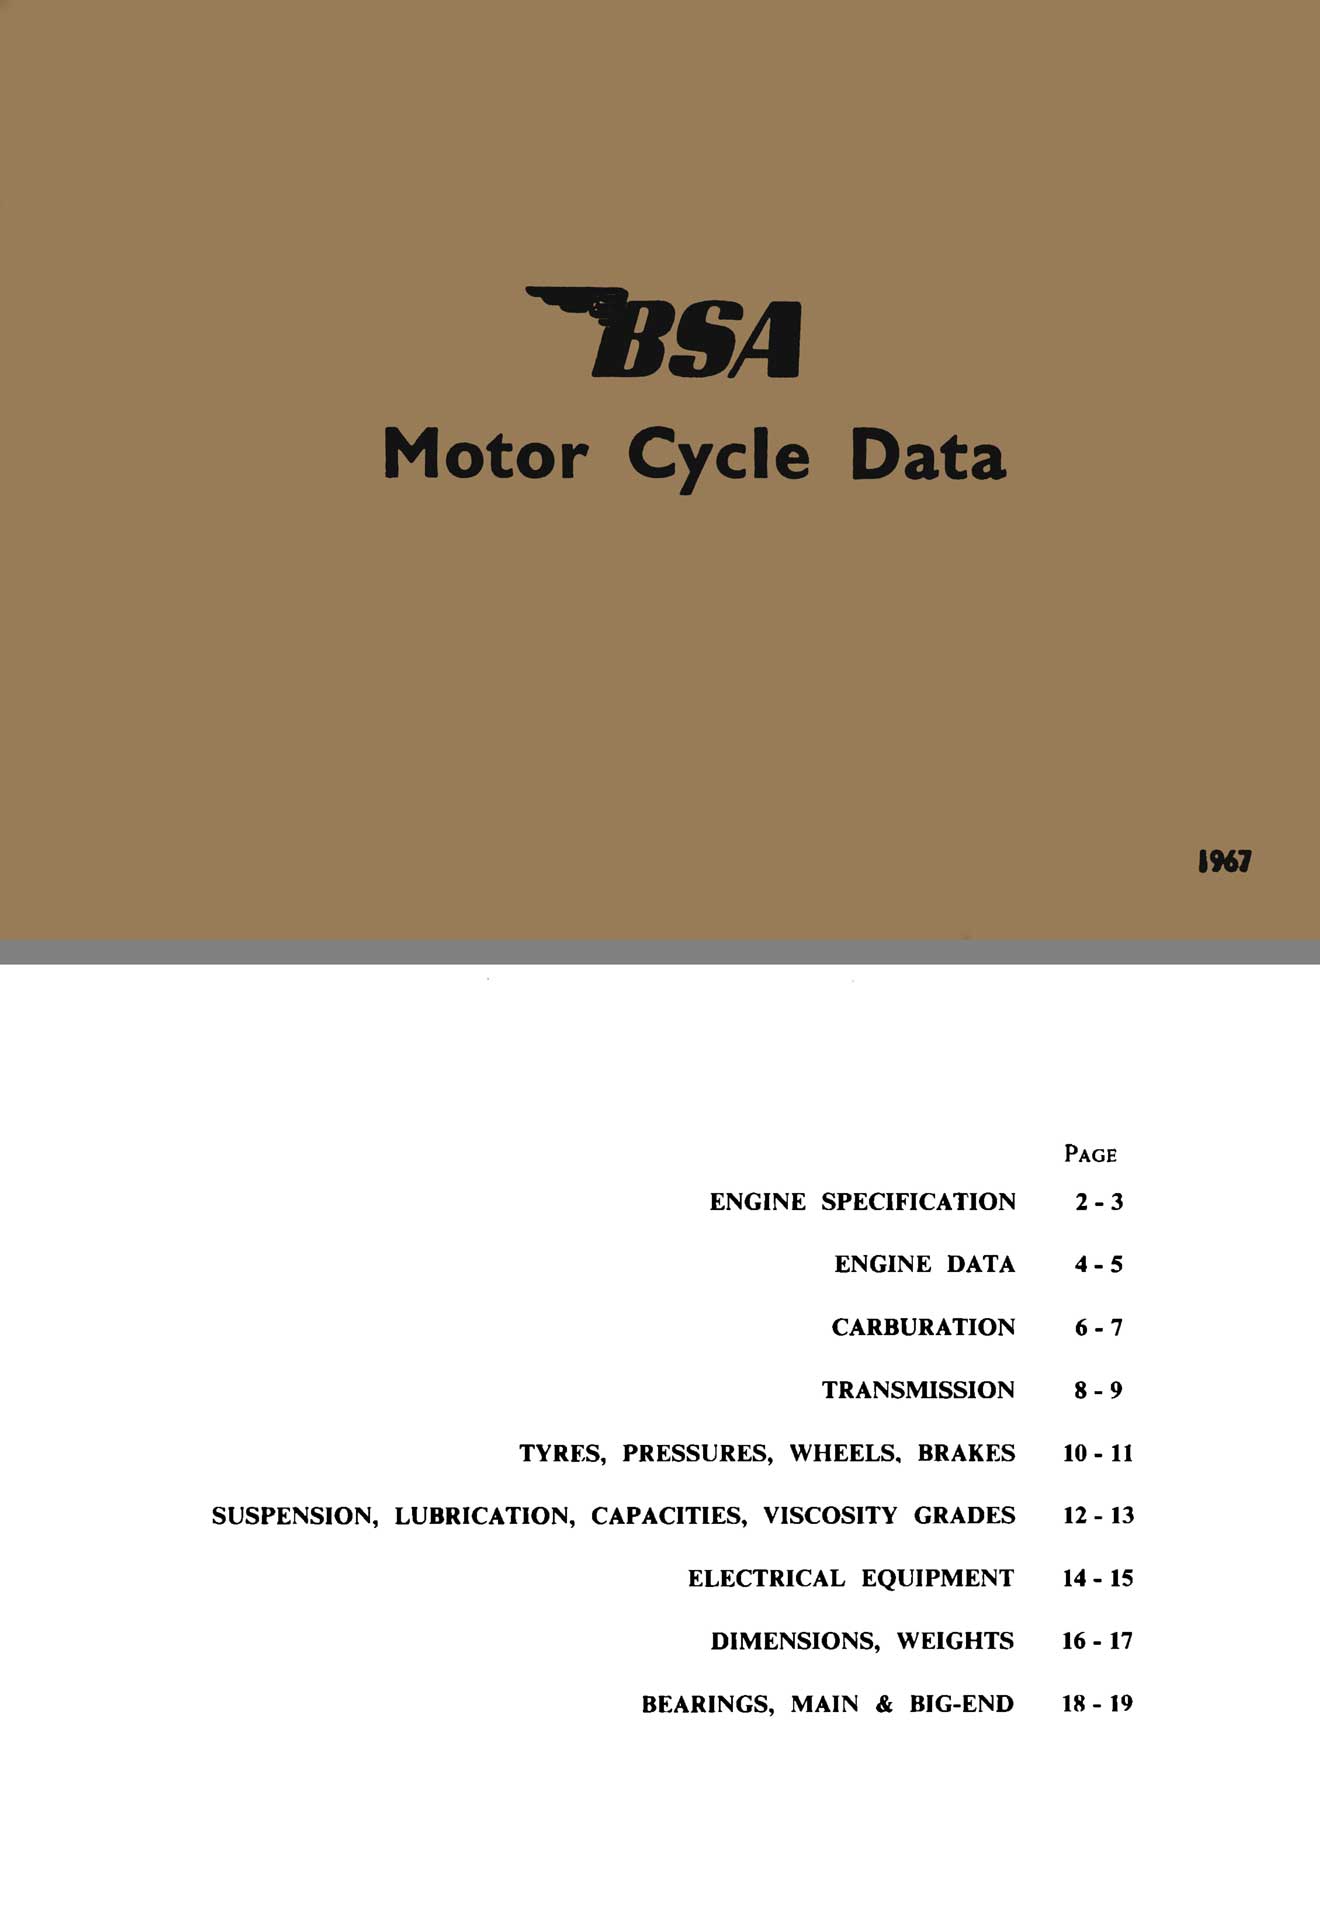 BSA Motor Cycle Data 1967 Catalog